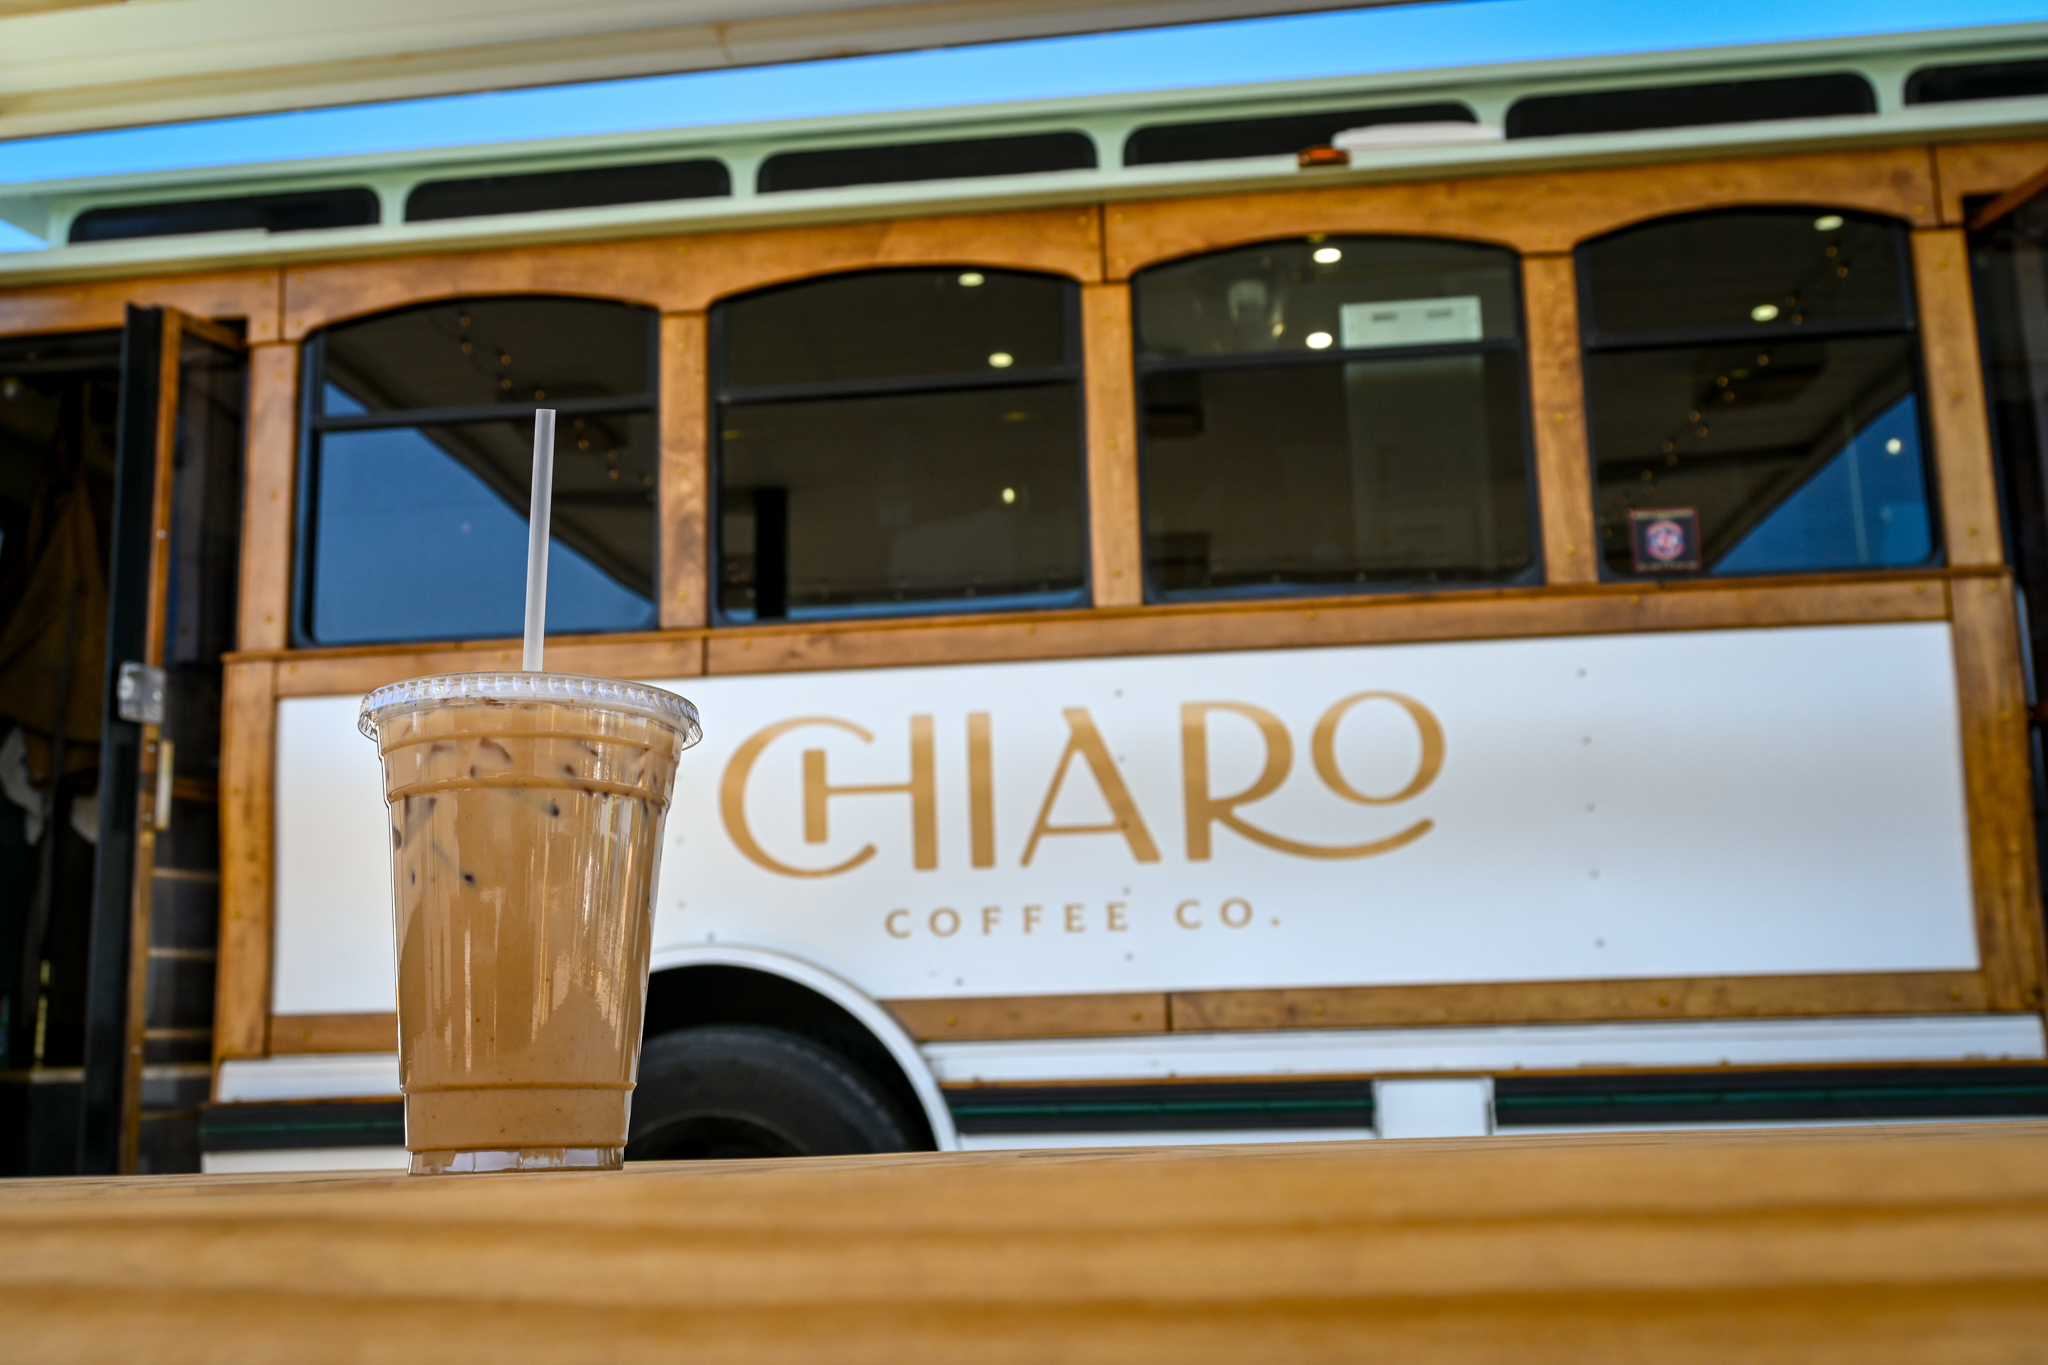 Chiaro Coffee Co. in Odessa, TX | Coffee Trolley 